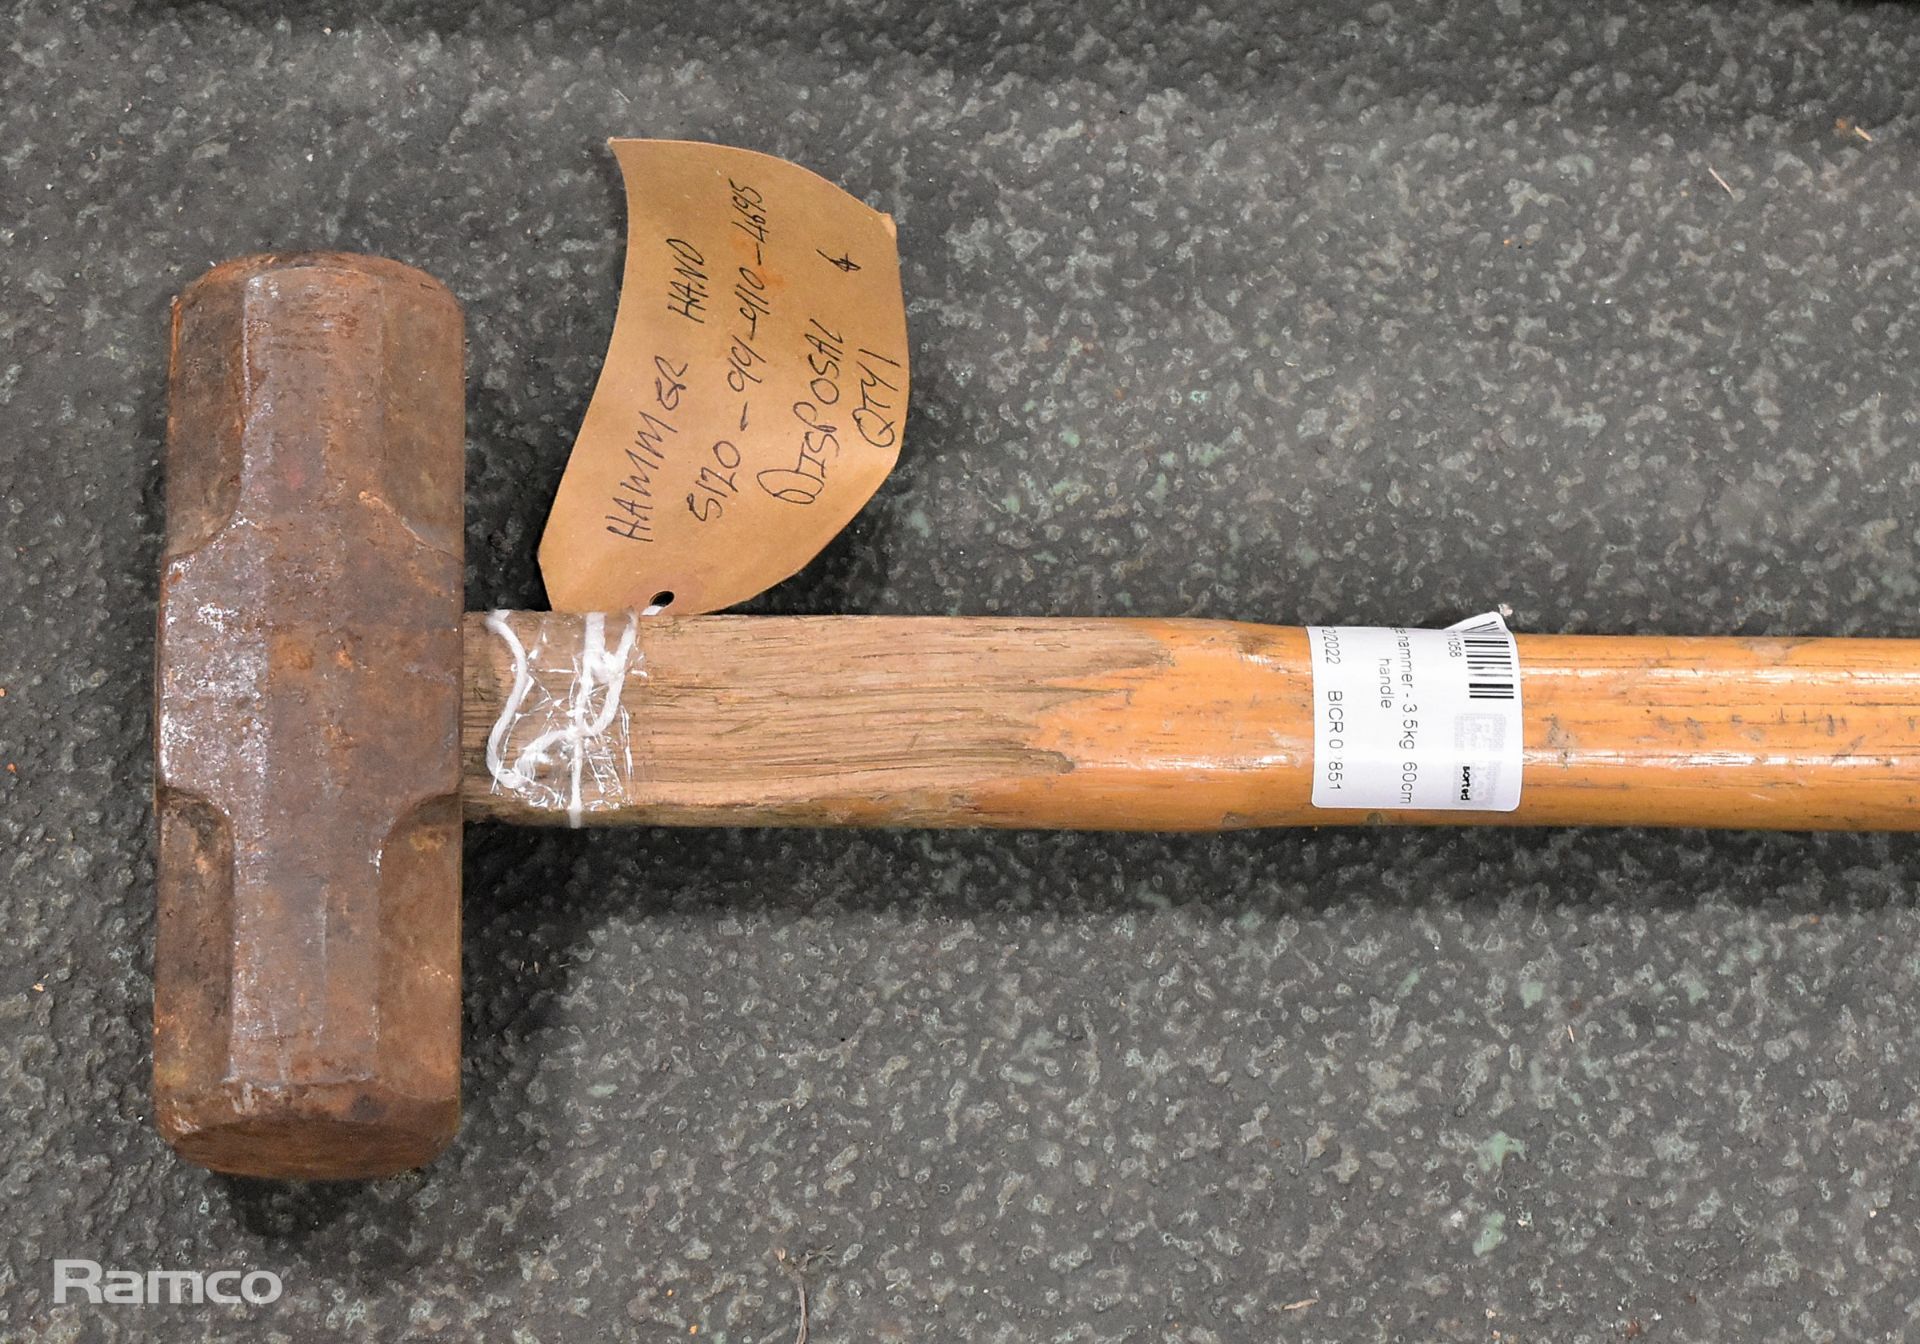 Sledge hammer - 3.5kg, 60cm handle, Metal picket post driver - Image 2 of 3